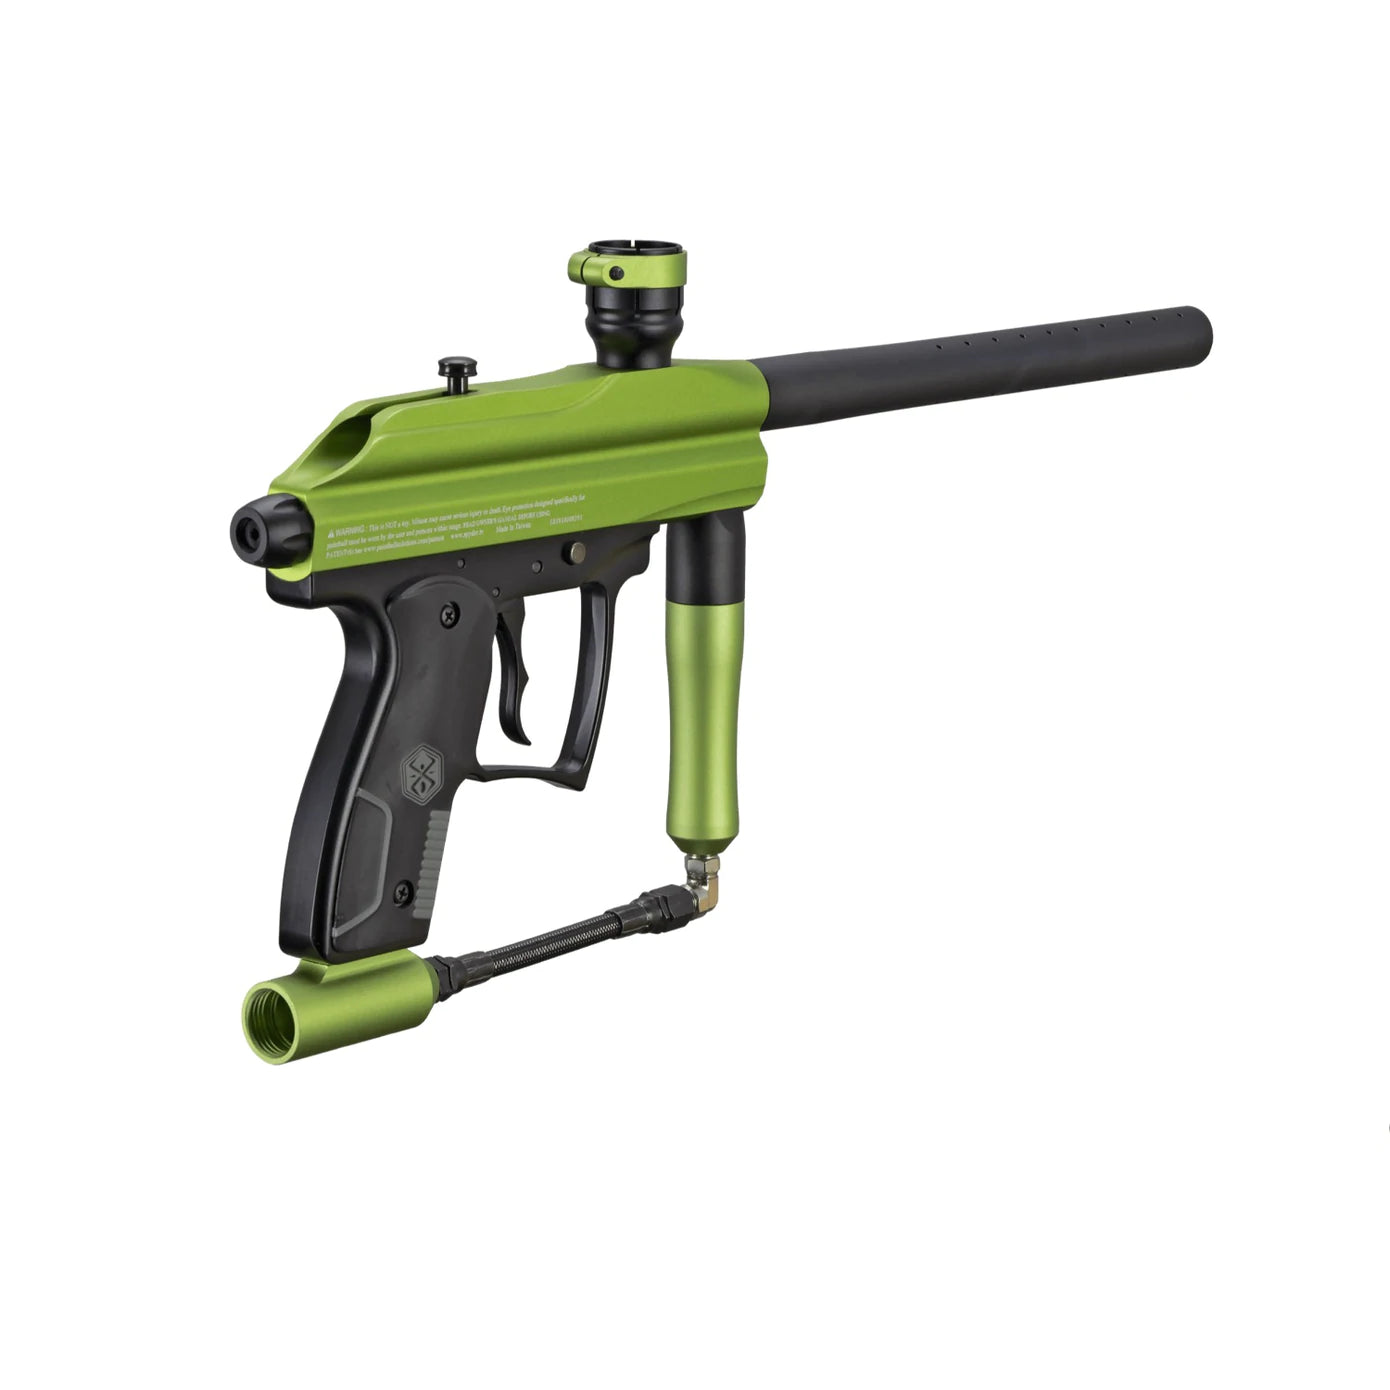 Spyder Xtra Paintball Marker | Multi Color | Shop Paintball Gun Online